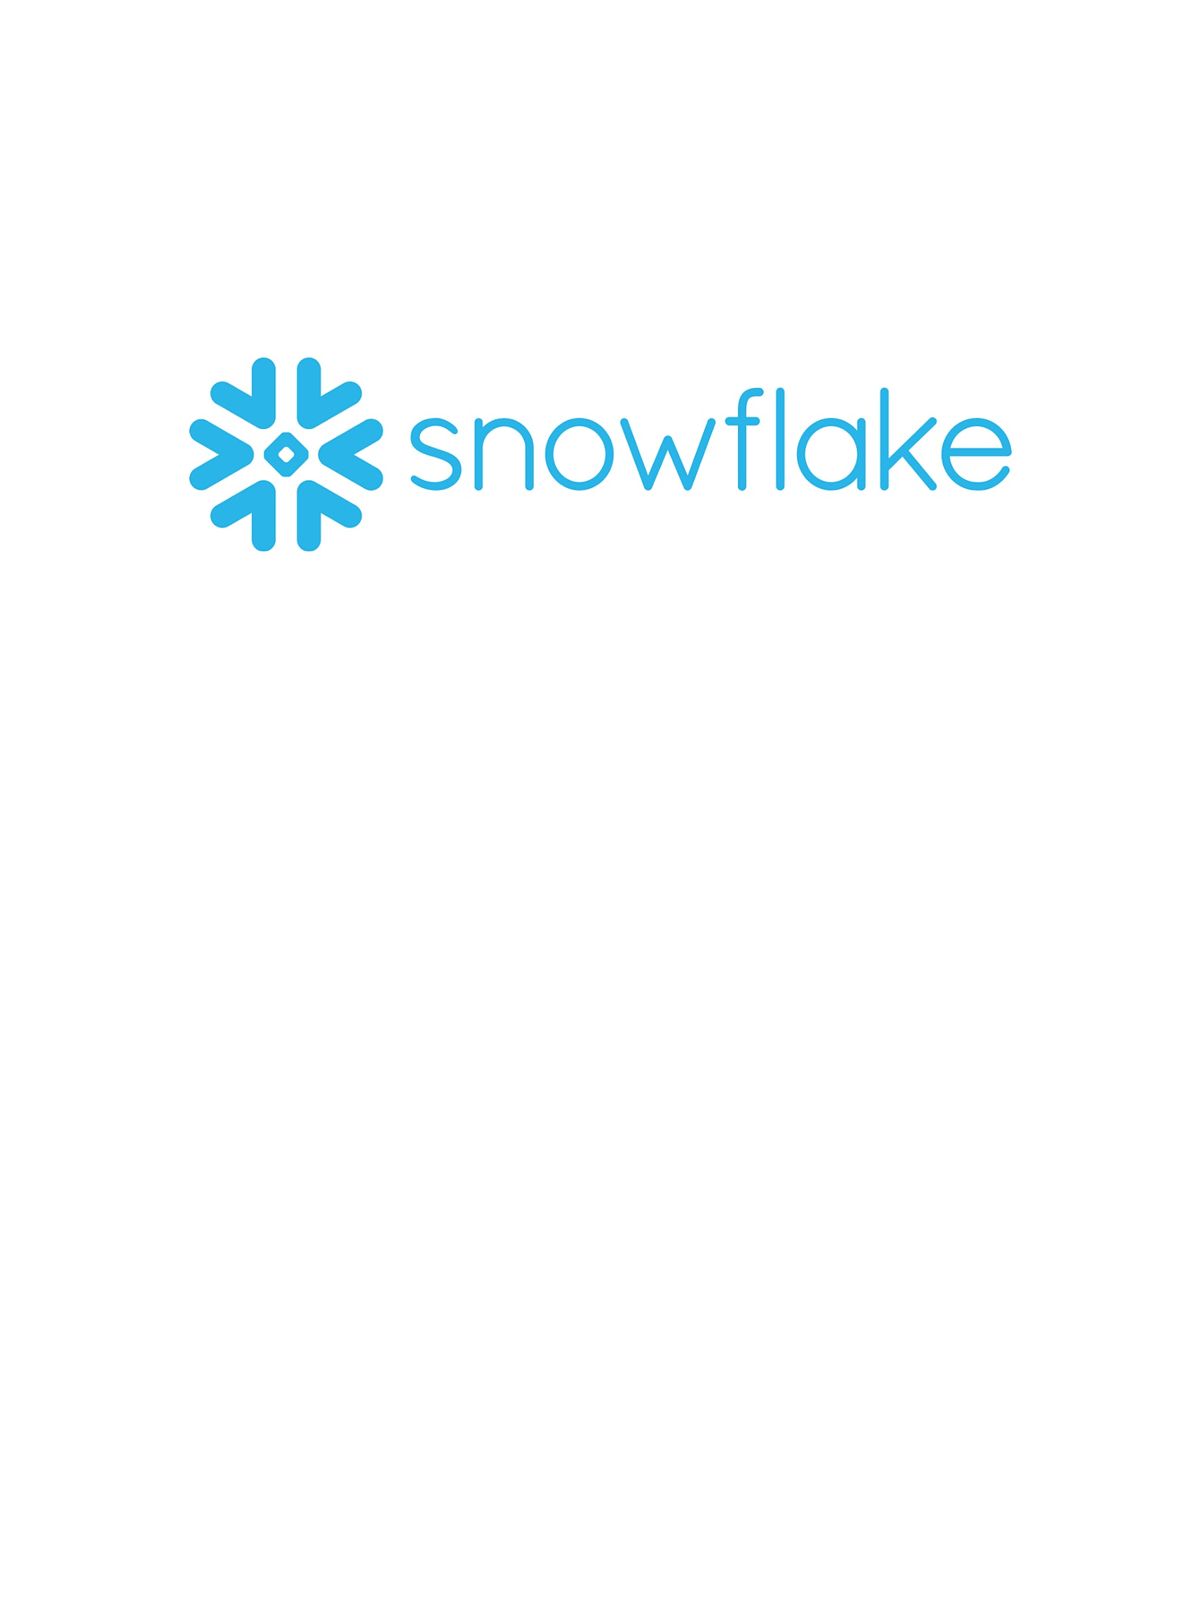 4 Weeks Snowflake cloud data platform Training Course Reston